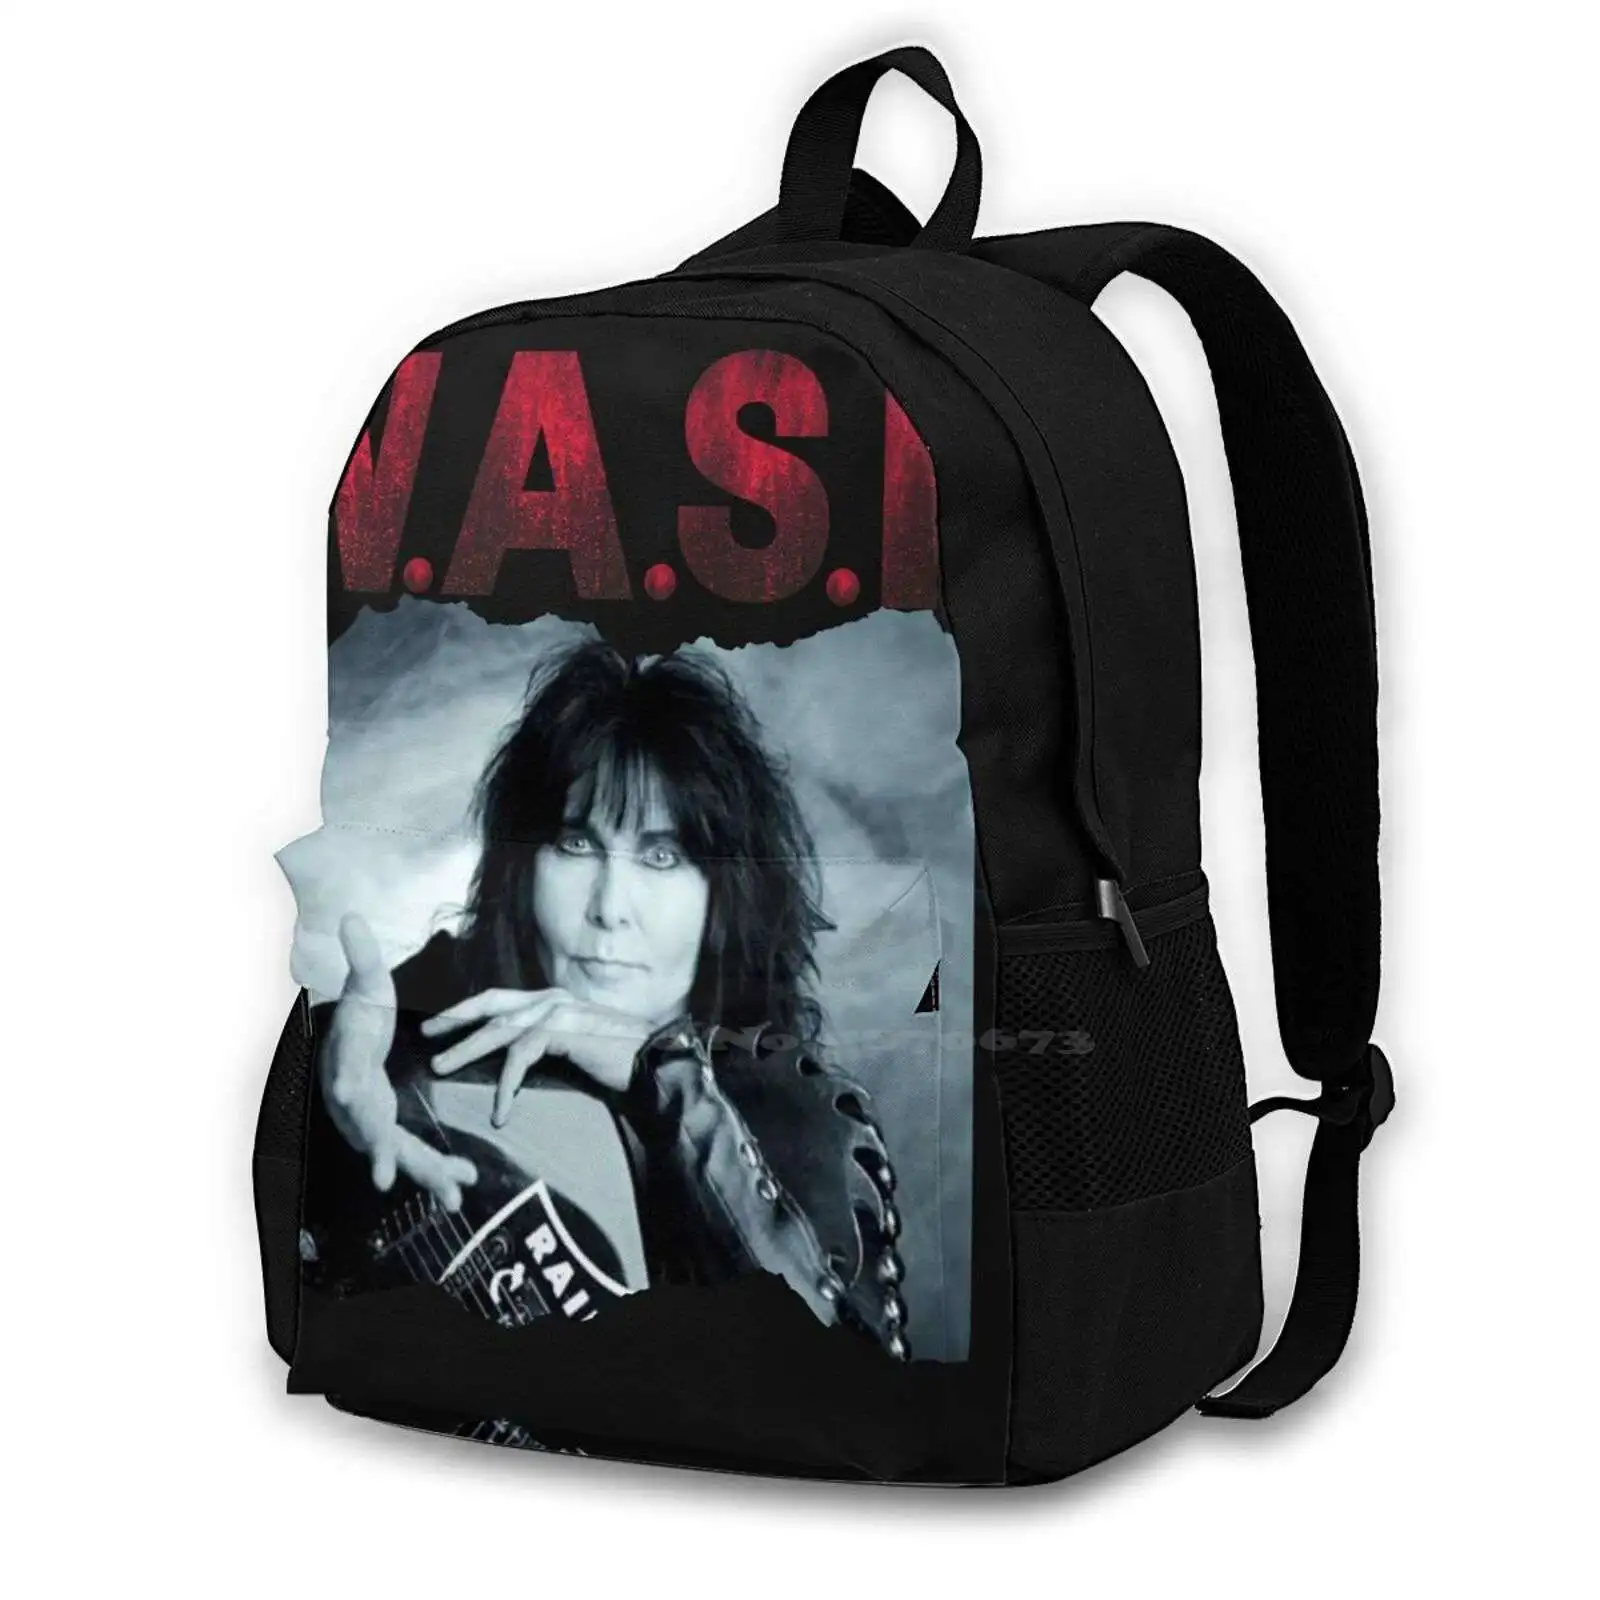 Classic Art Blackie L- Retro Bag Backpack For Men Women Girls Teenage Black Blackie Blackie Lawless Wasp Wasp Band Band Metal